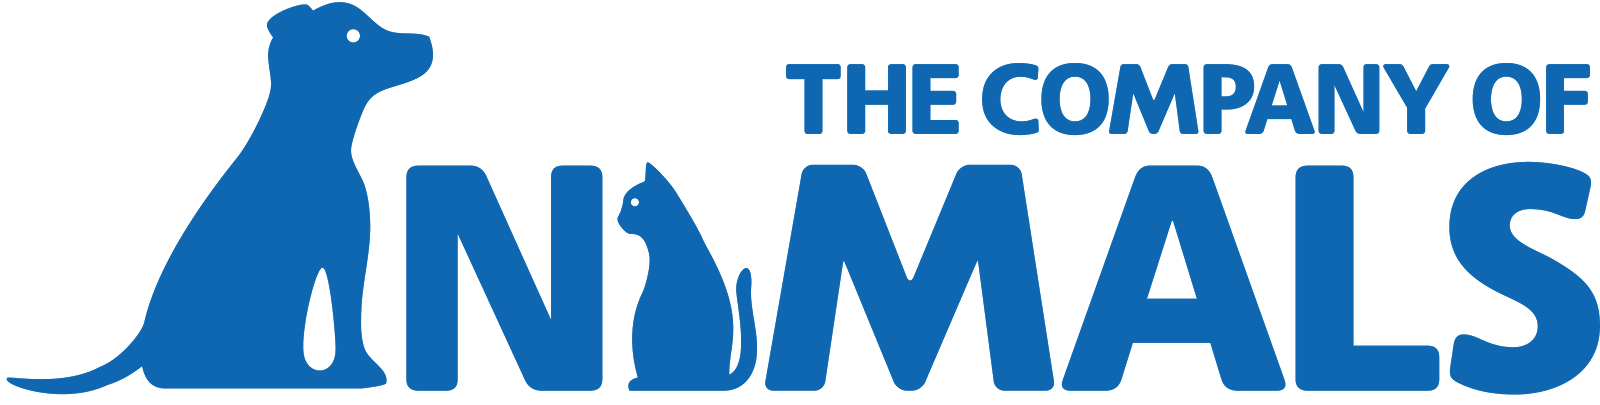 The Company of Animals - Major Sponsor